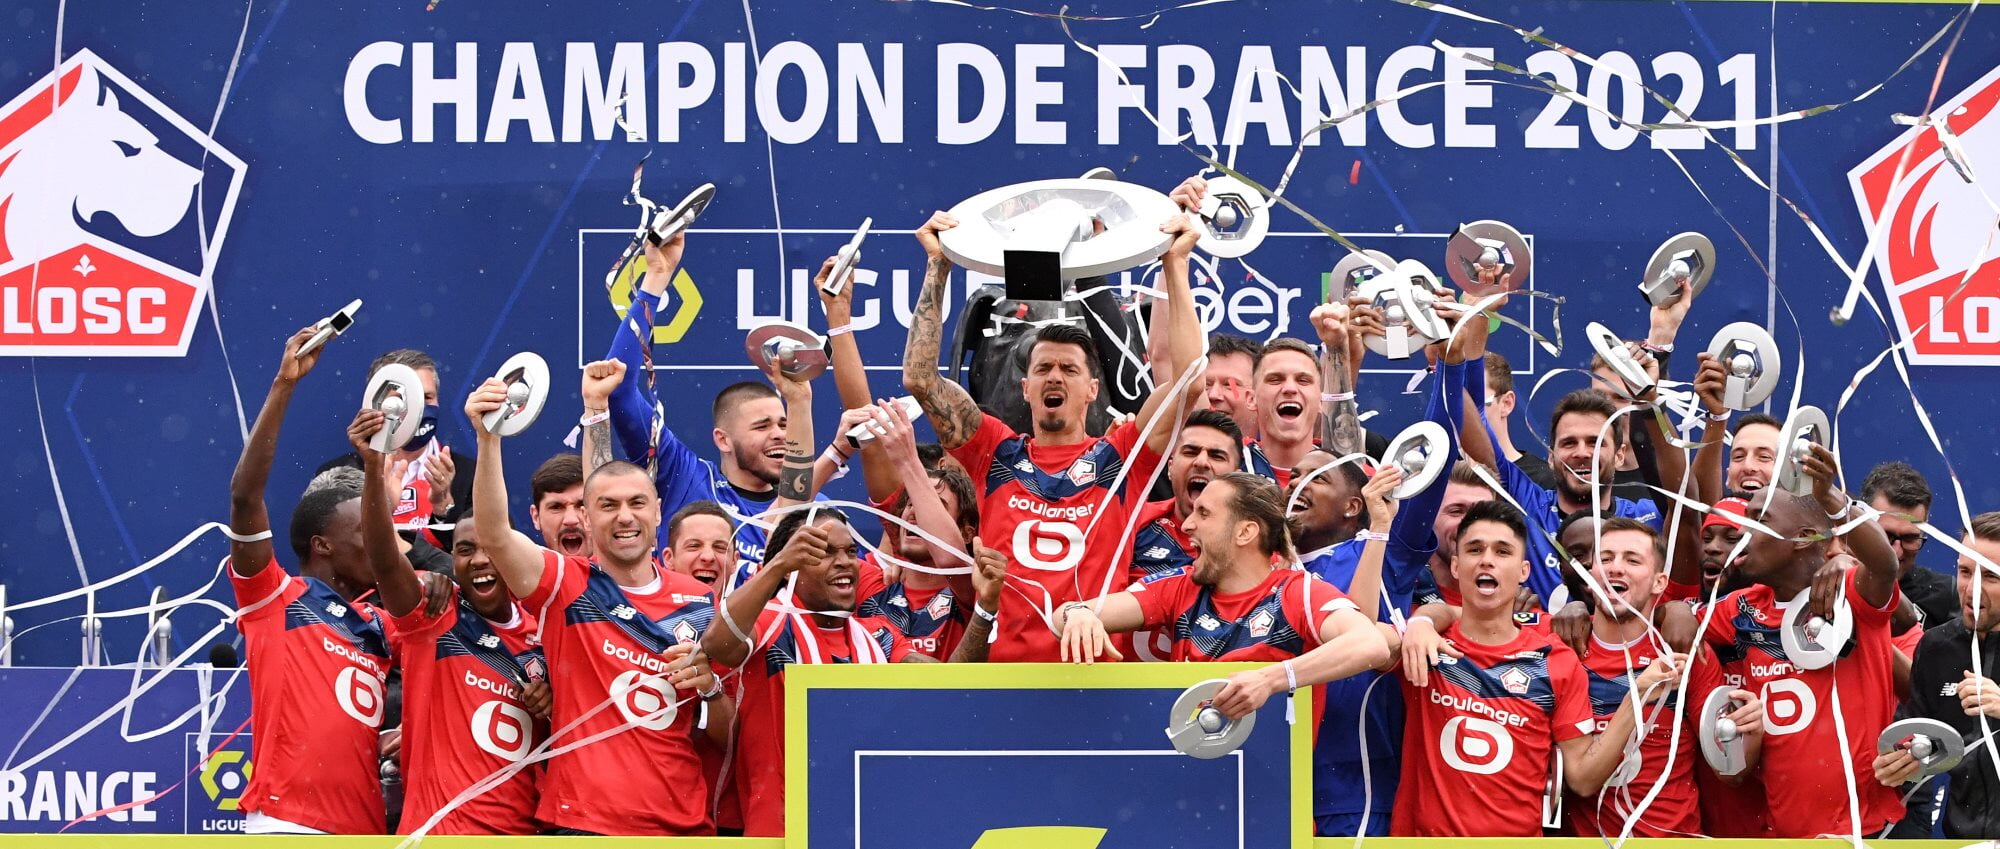 José Fonte celebrating title with Lille